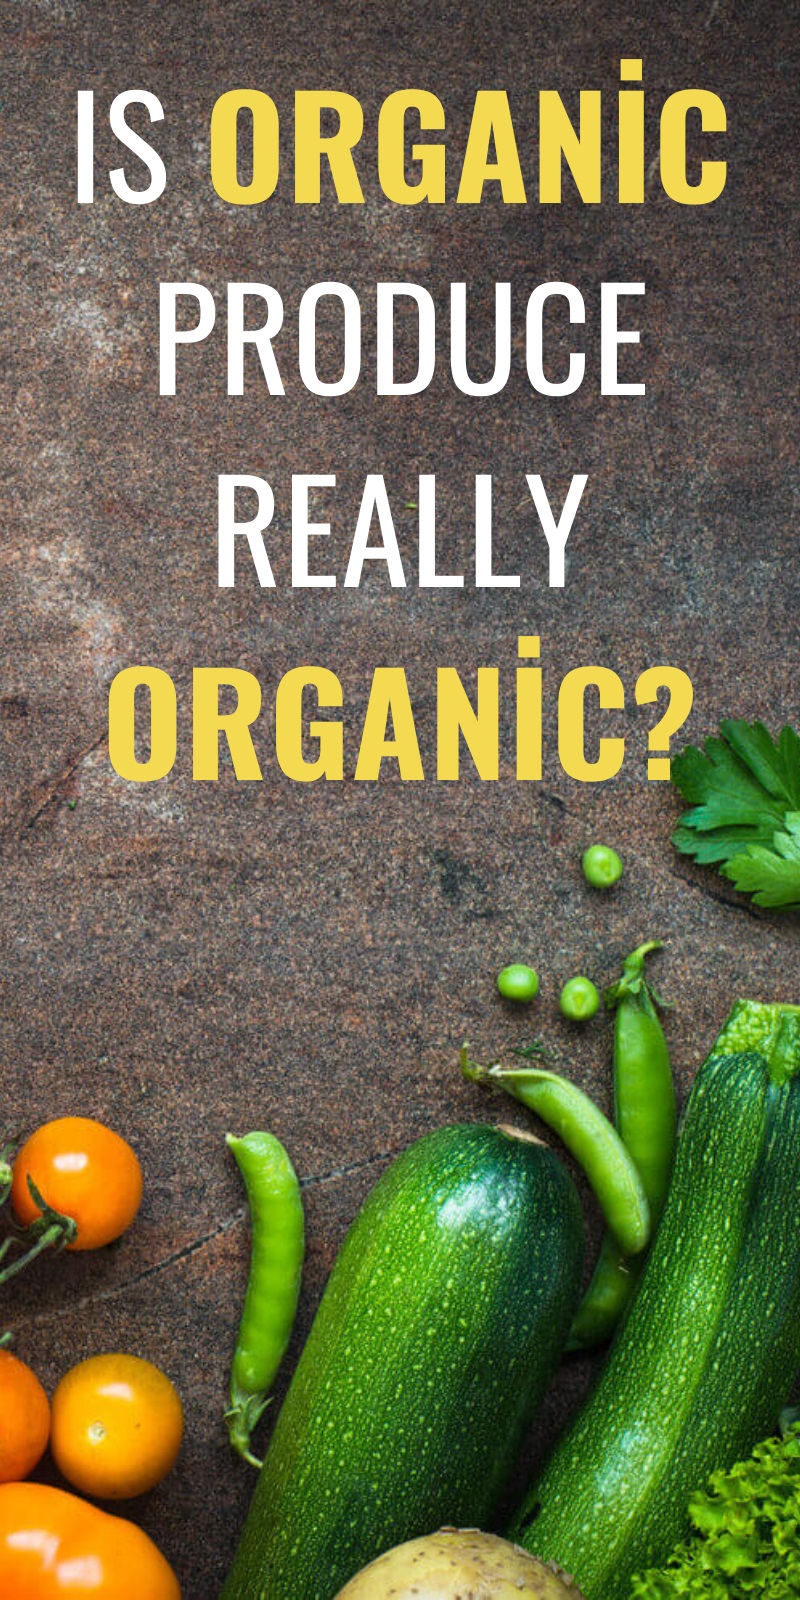 Really Organic